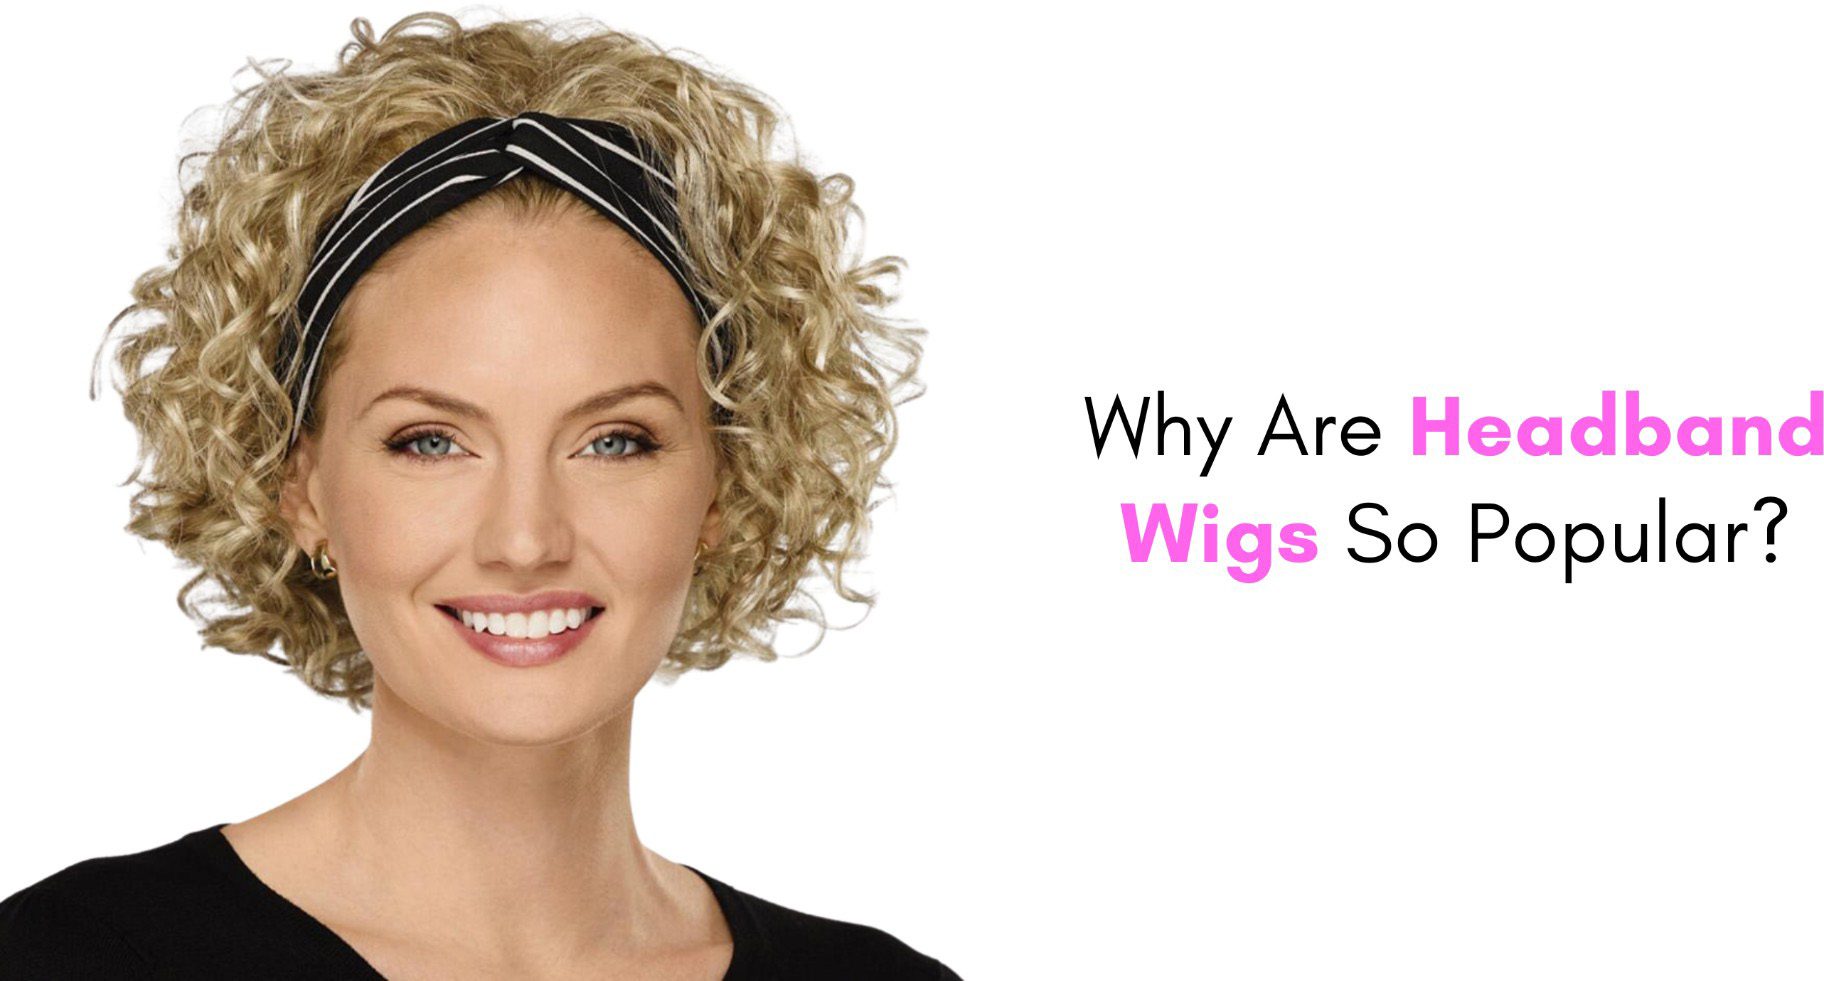 Why Are Headband Wigs So Popular?